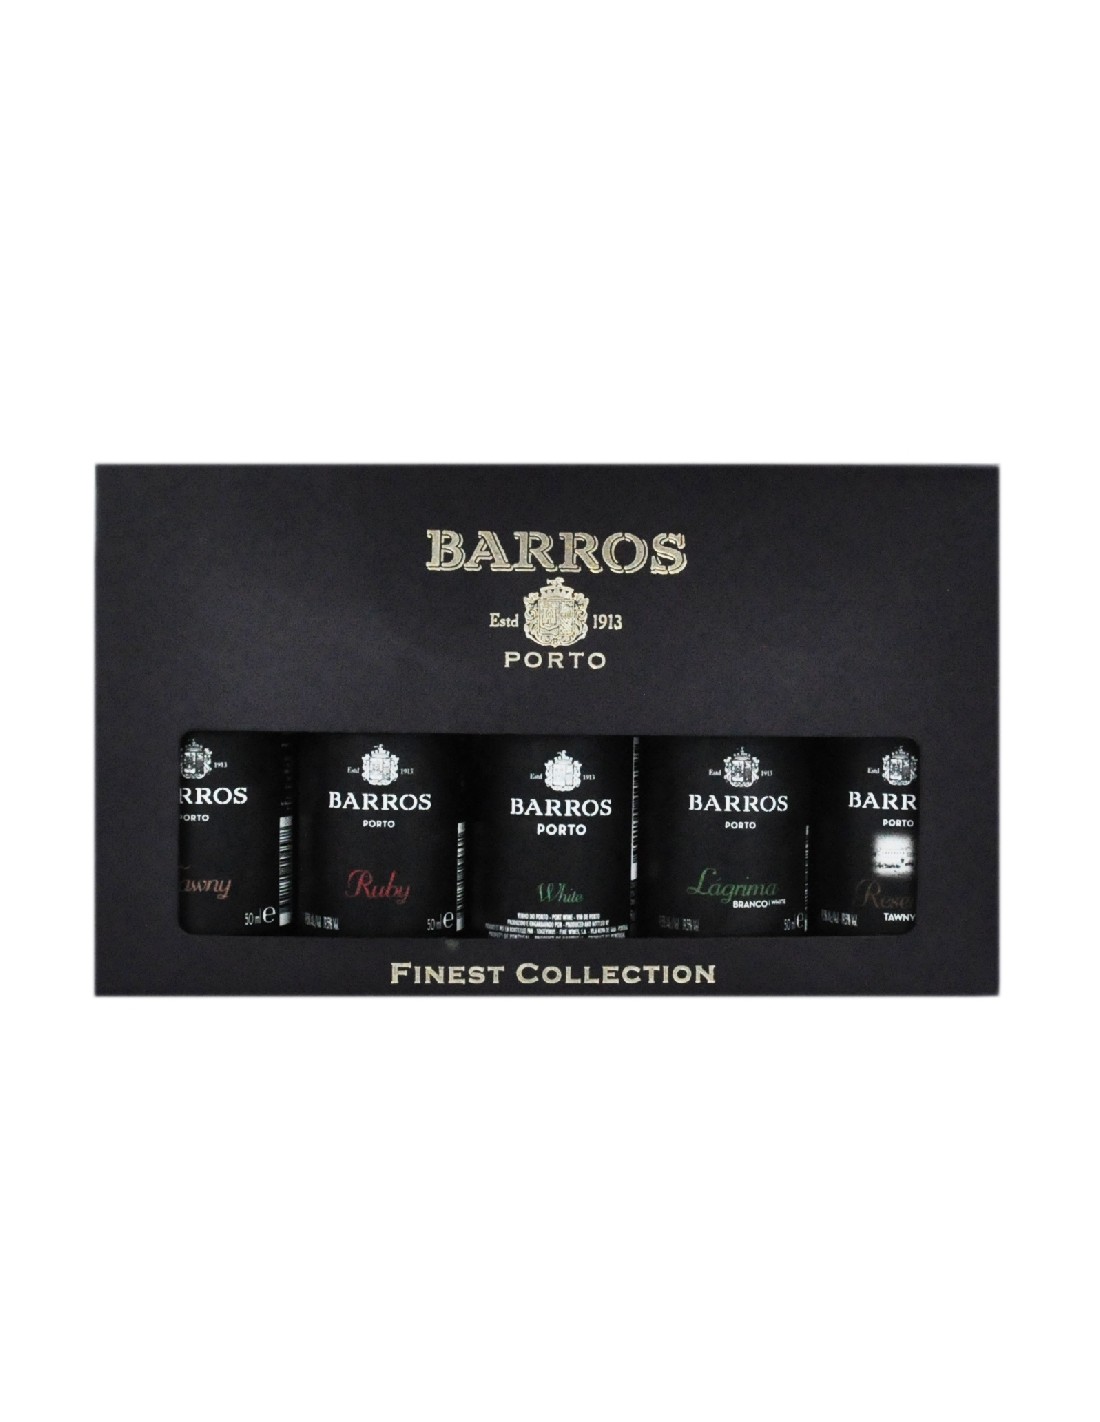 Vin porto Barros, kit 5 miniaturi, 0.05L, 19.5% alc., Portugalia alcooldiscount.ro